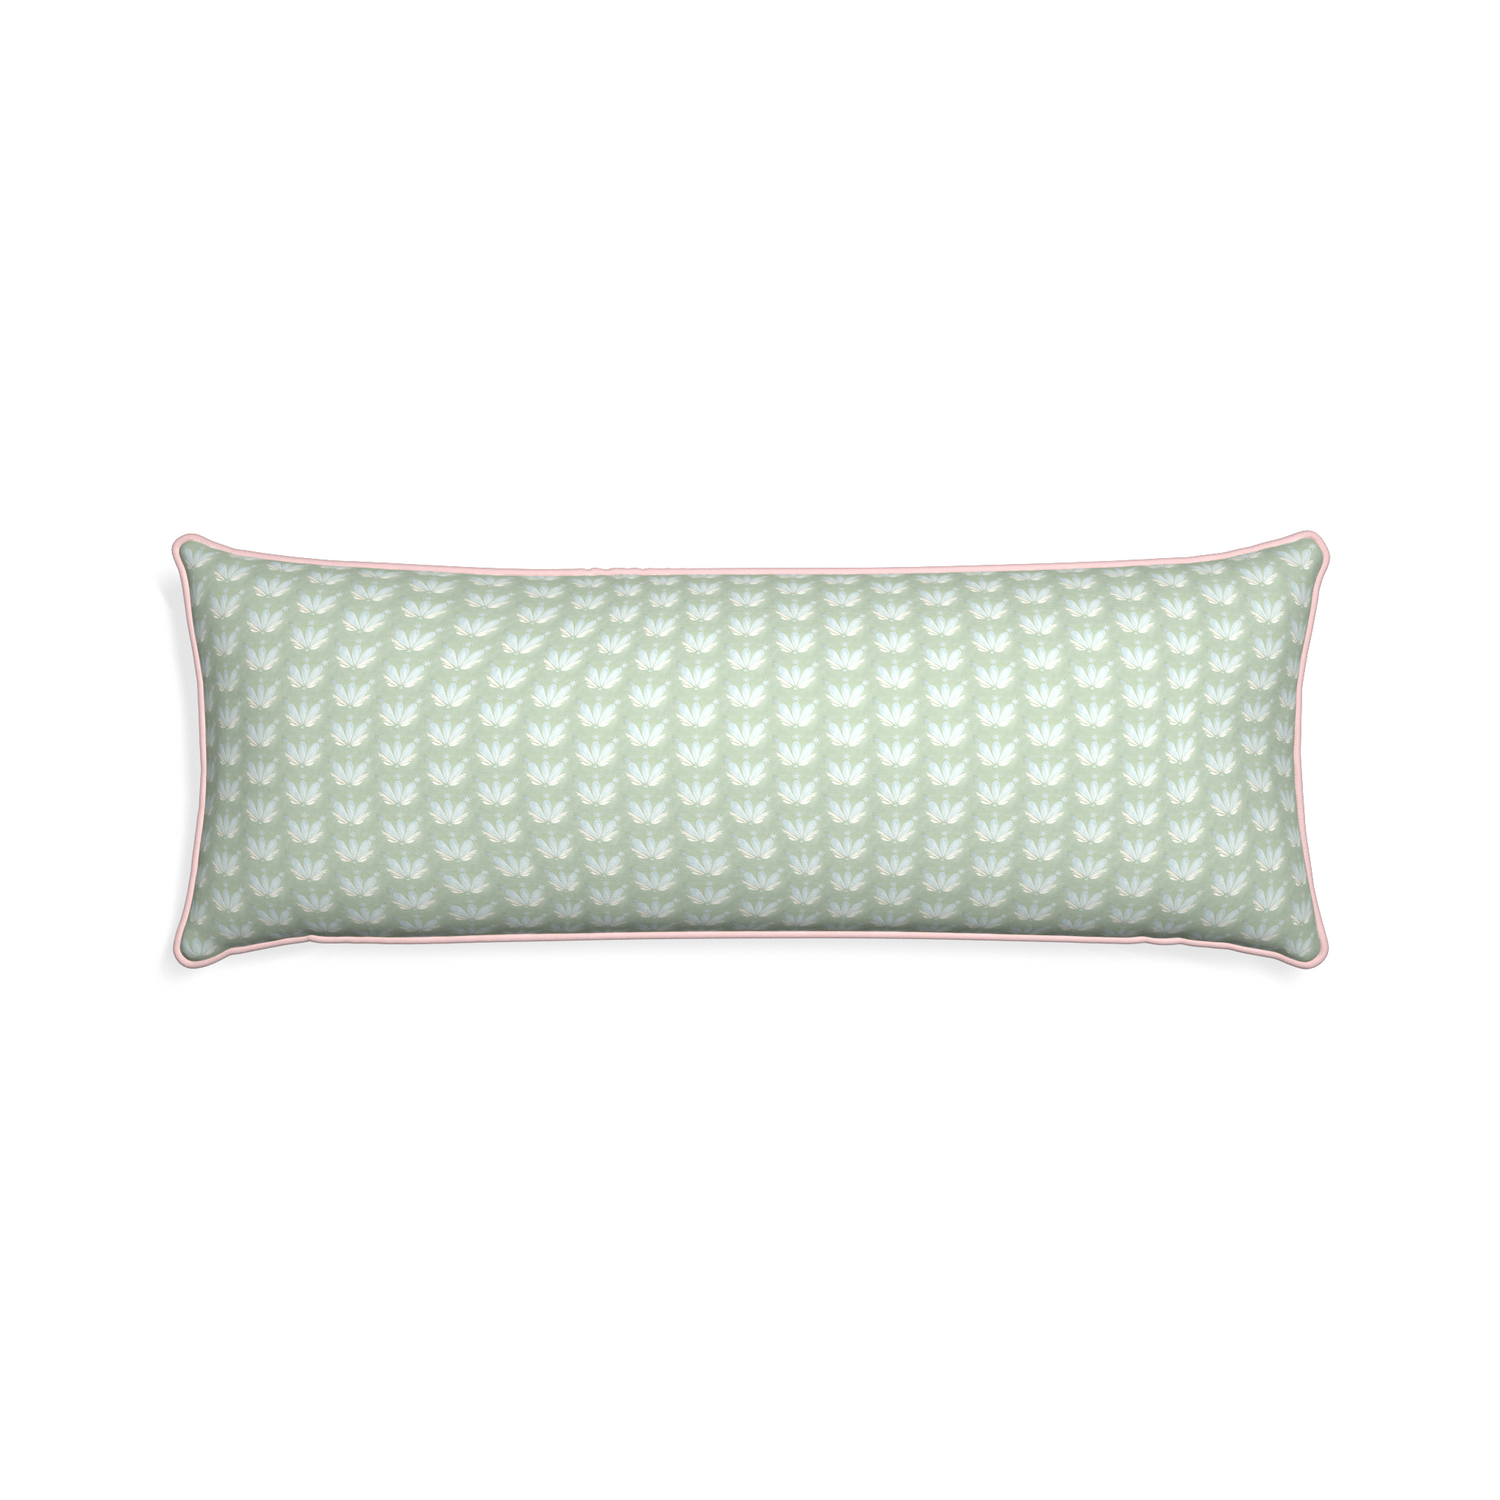 Xl-lumbar serena sea salt custom pillow with petal piping on white background